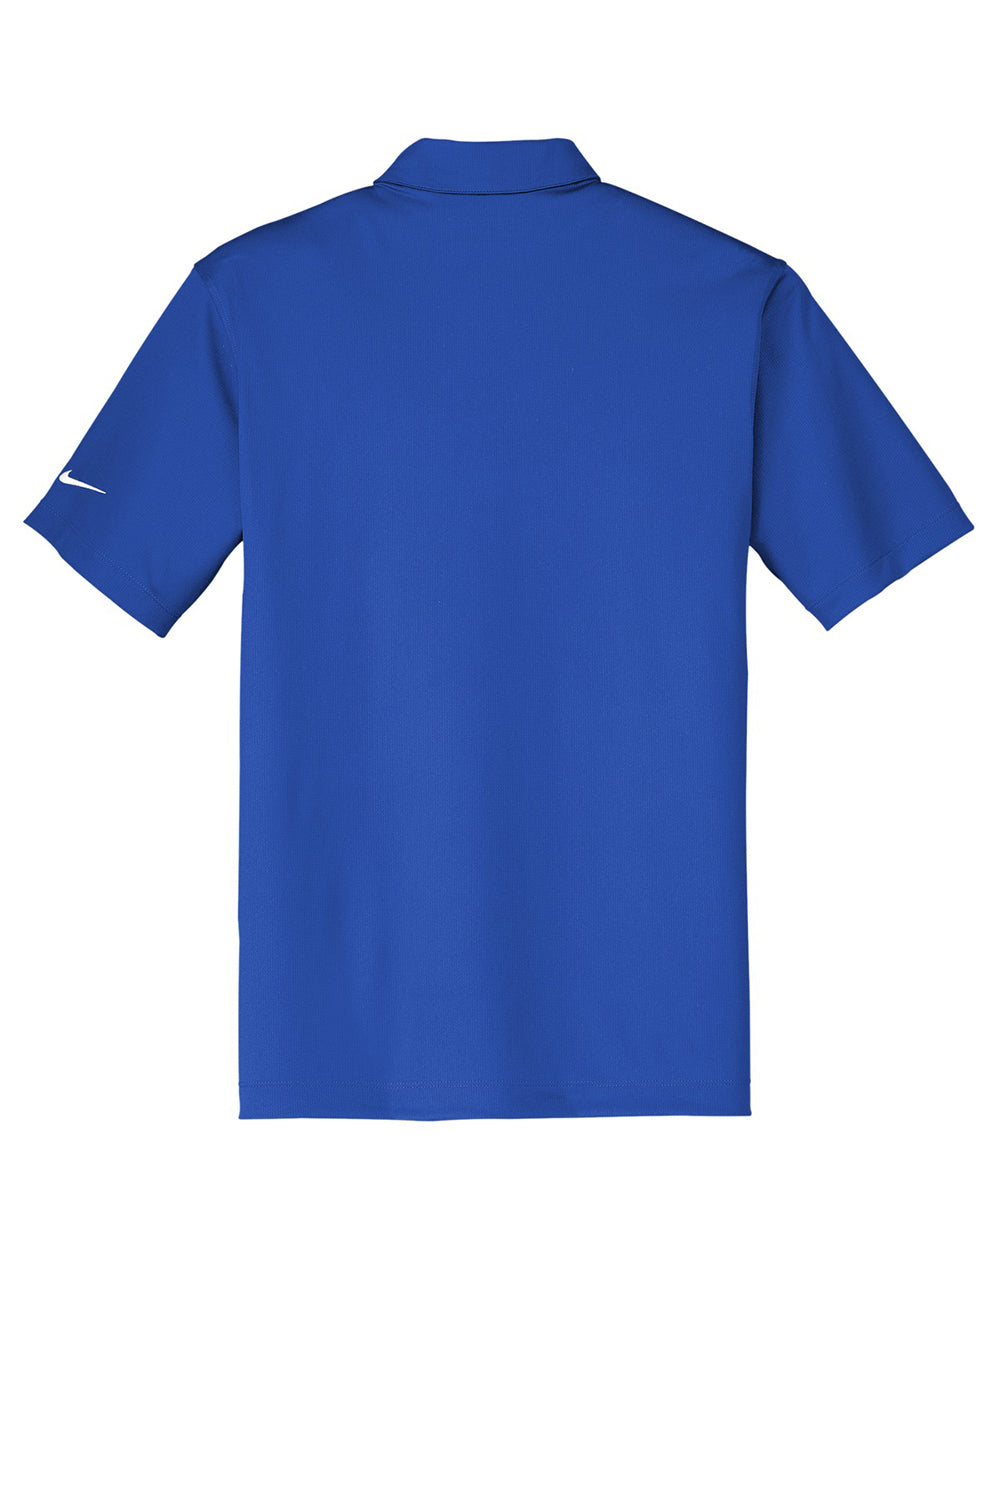 Nike 637167 Mens Dri-Fit Moisture Wicking Short Sleeve Polo Shirt Royal Blue Flat Back